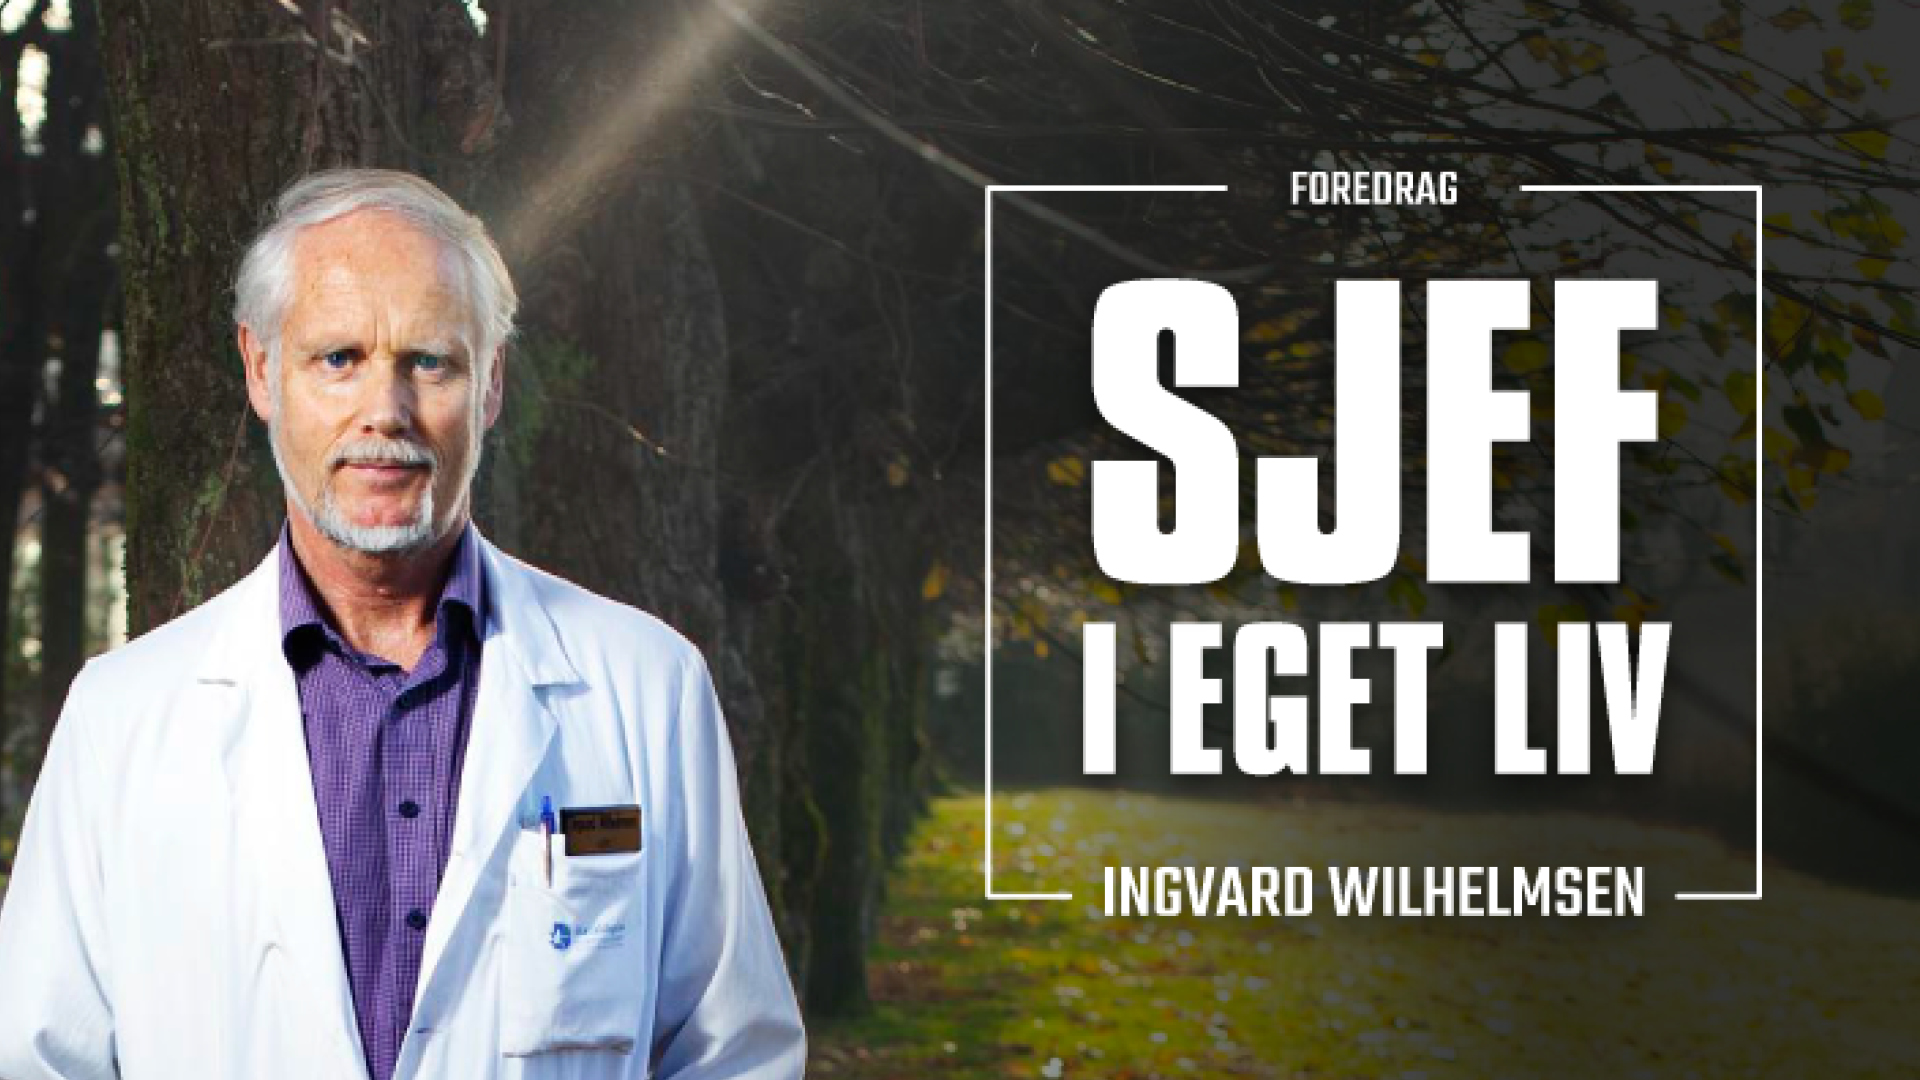 Ingvard Wilhelmsen: Boss in his own life